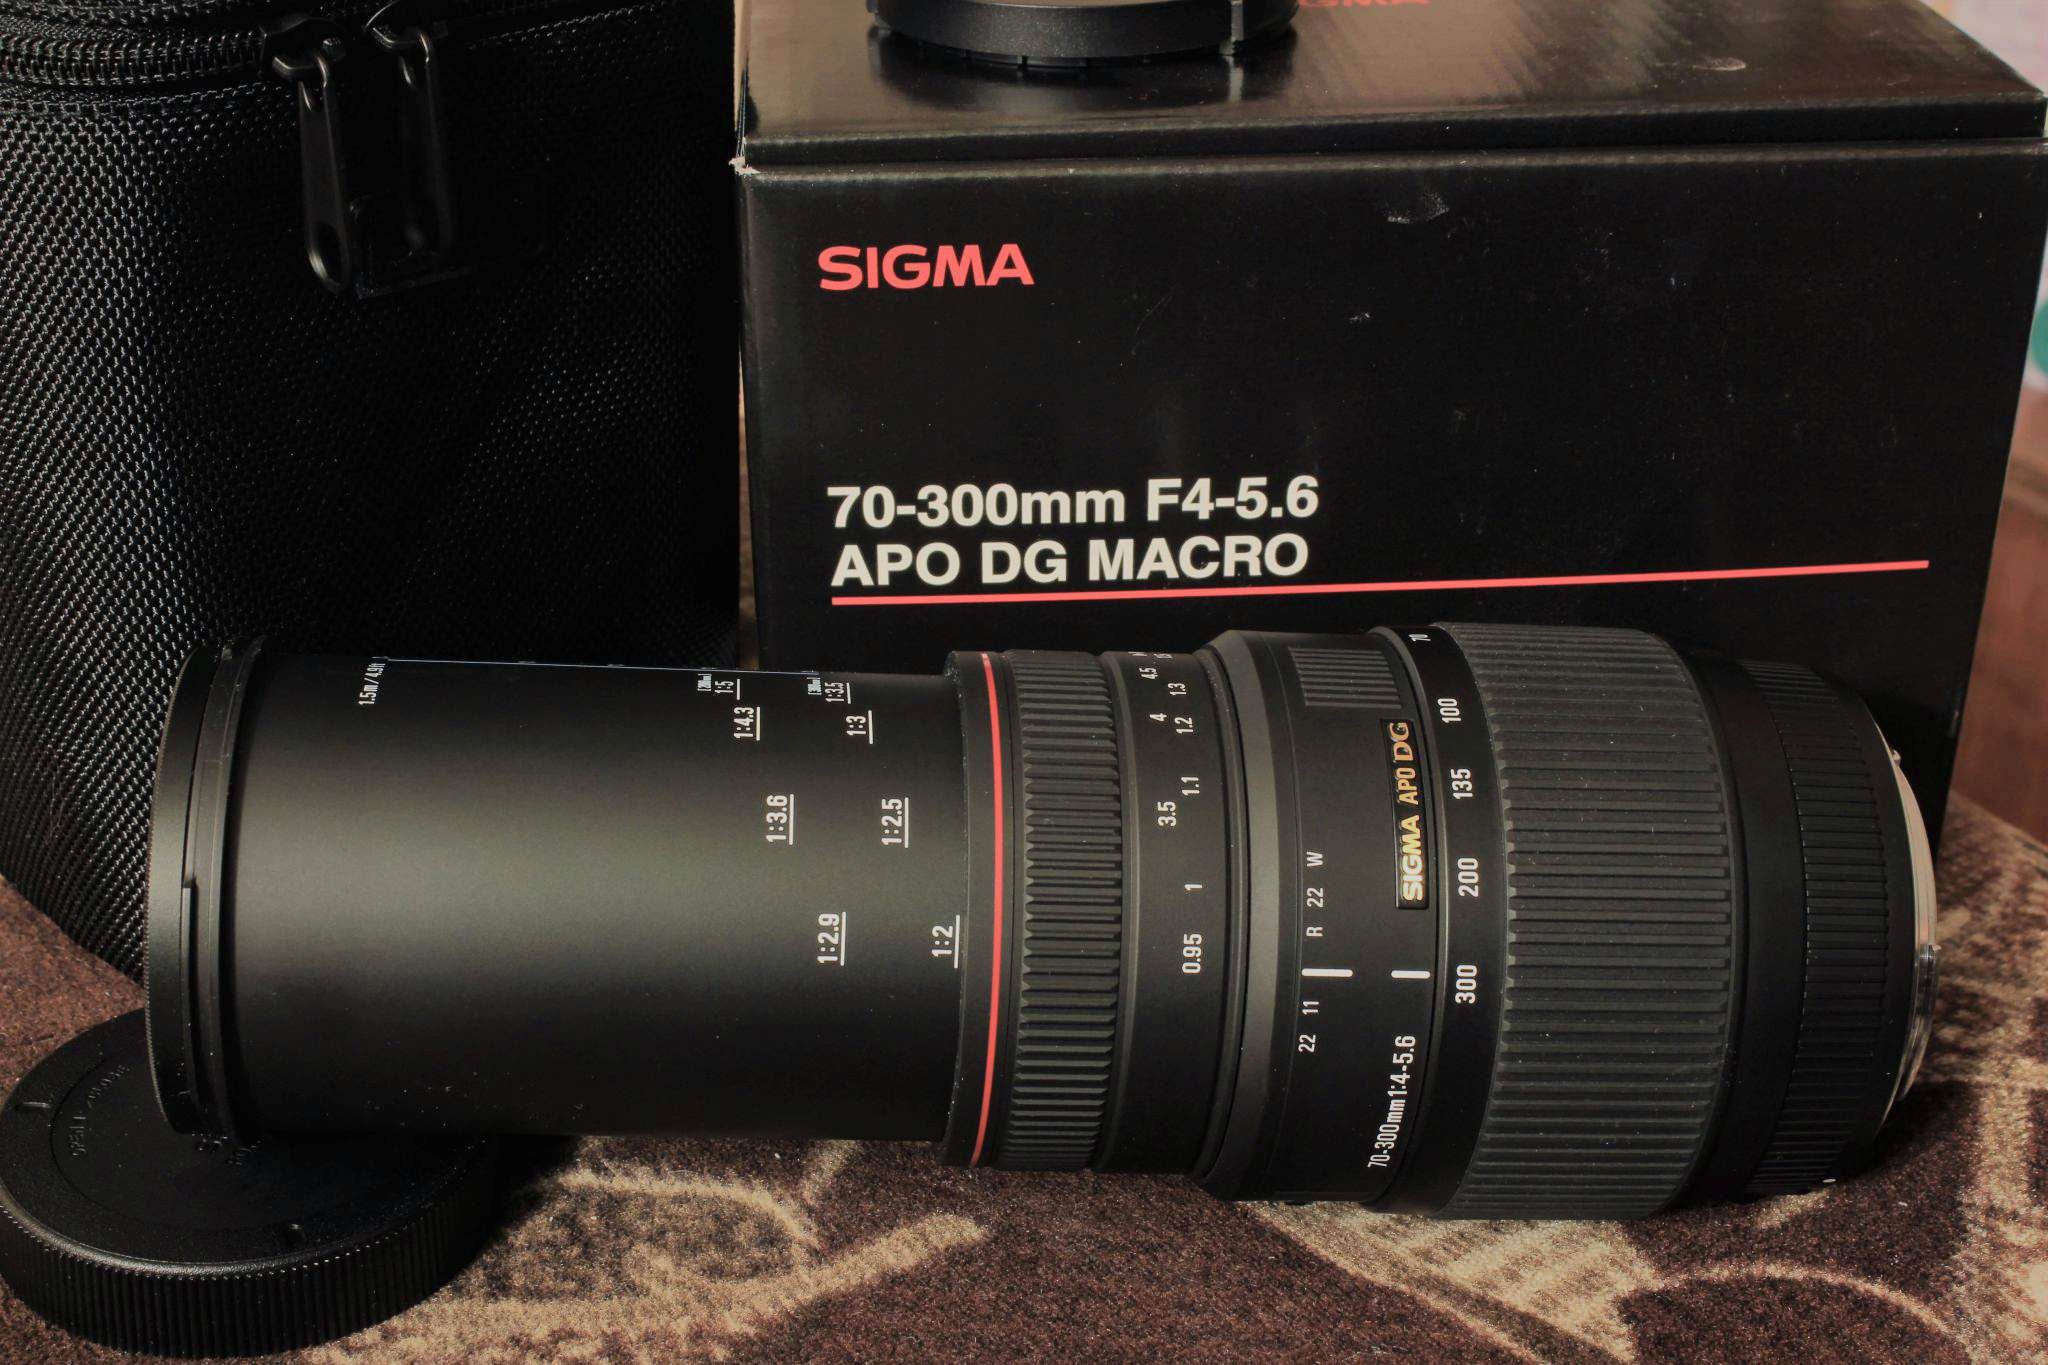 Sigma dg 70 300mm. Sigma af 70-300mm f/4-5.6 apo macro DG Nikon f. Объектив Sigma 70-300mm 1:4-5.6 apo DG. Объектив Sigma DG 70-300.